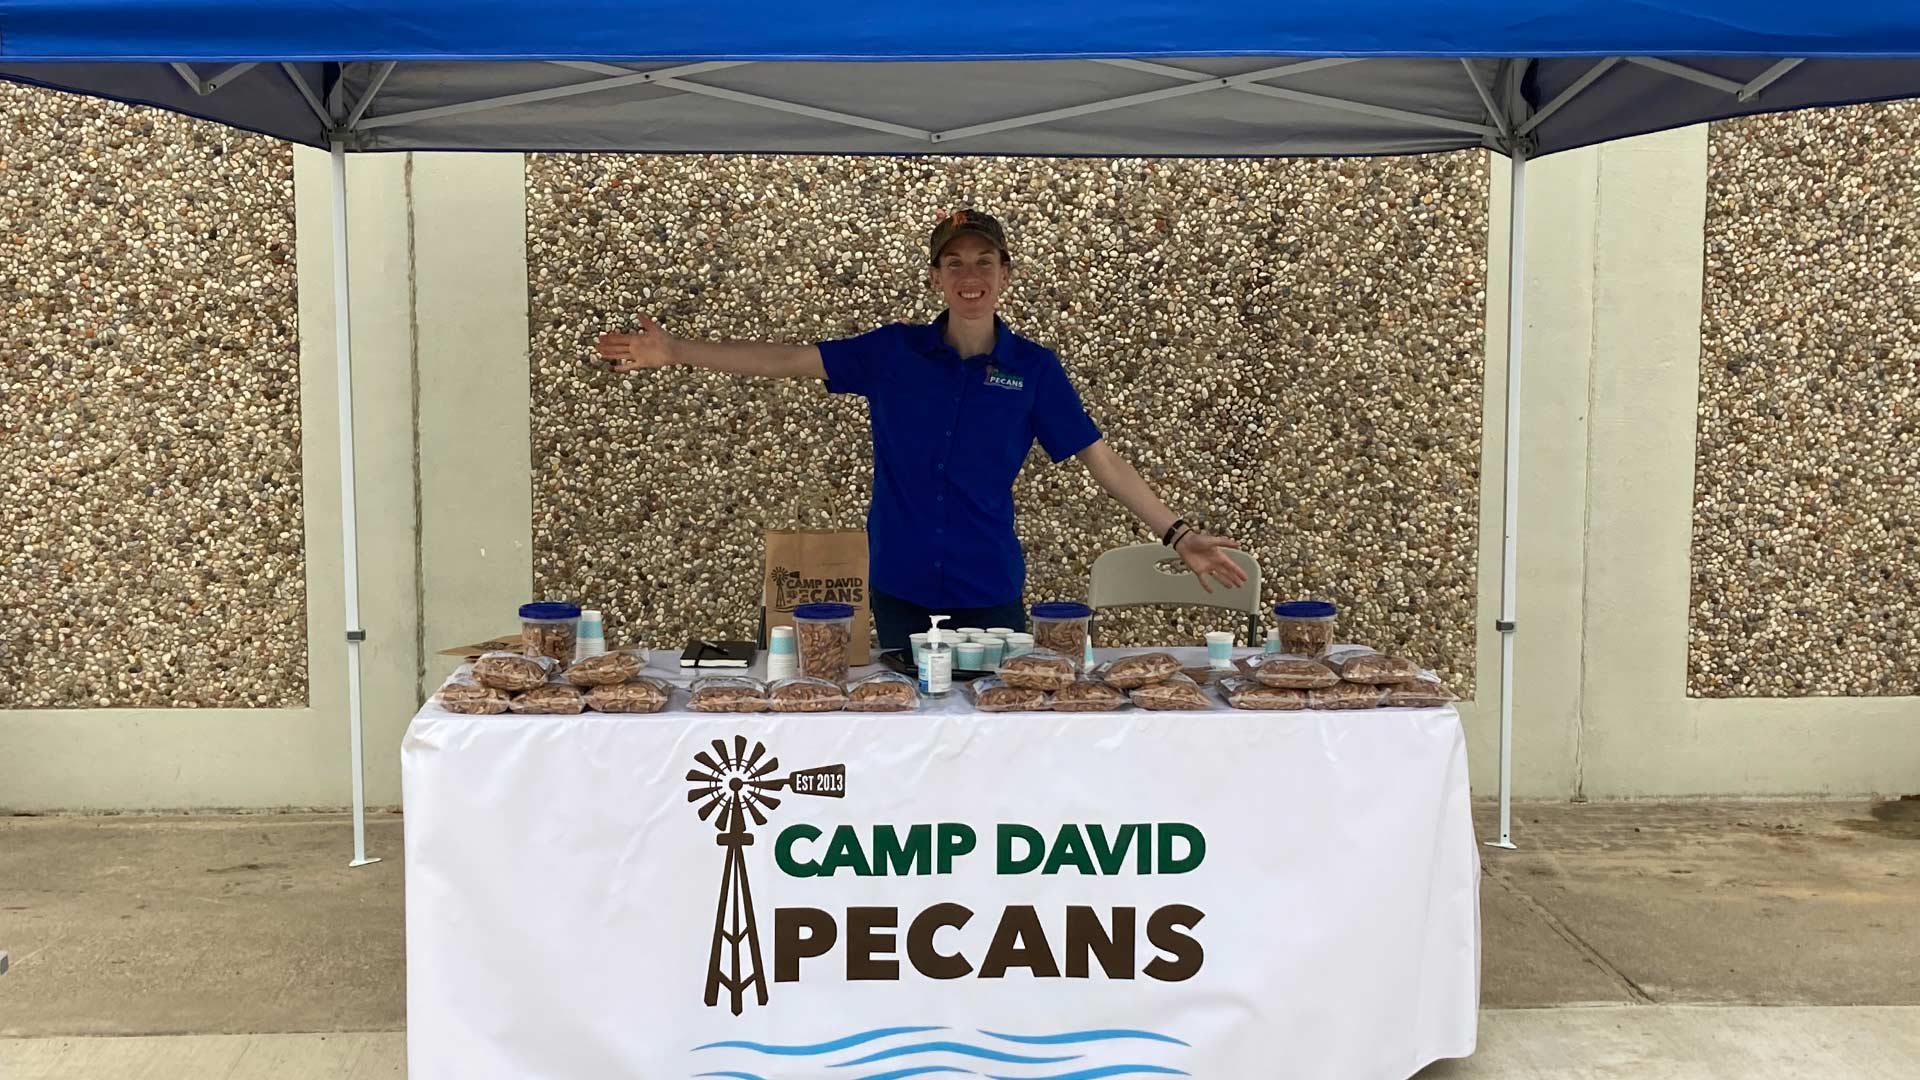 Camp David Pecans